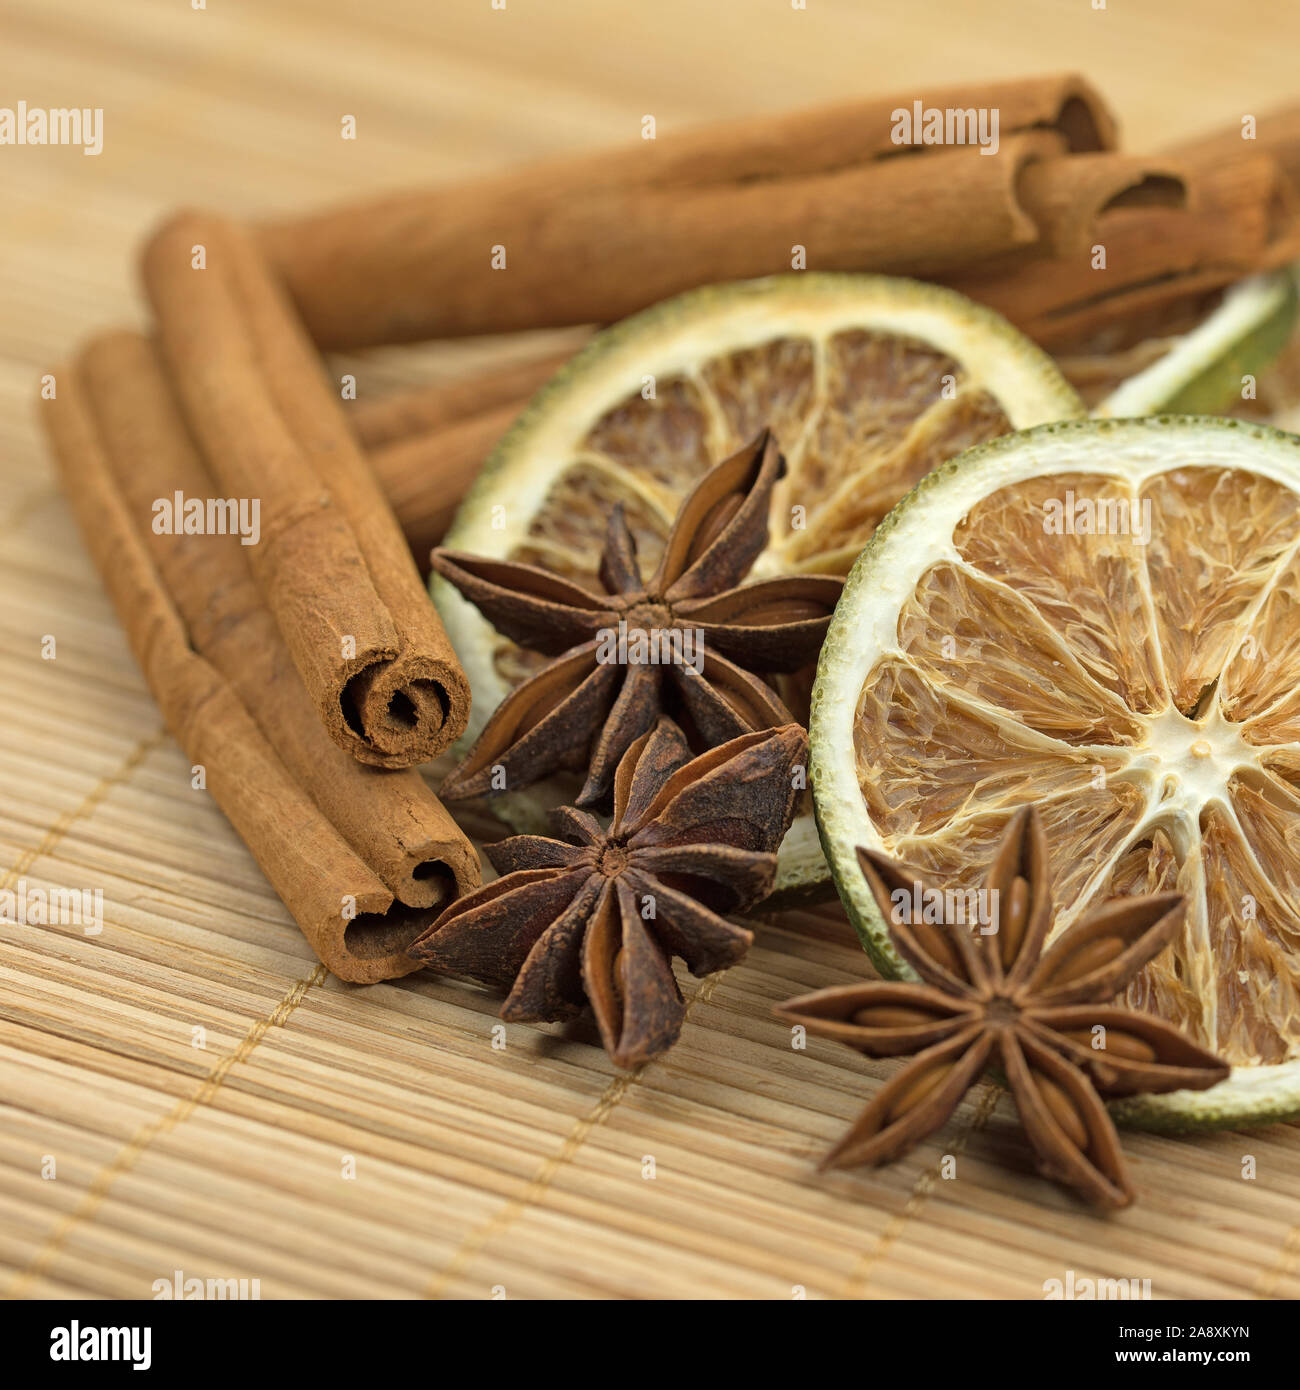 Anise stars, lemon slices and cinnamon sticks Stock Photo